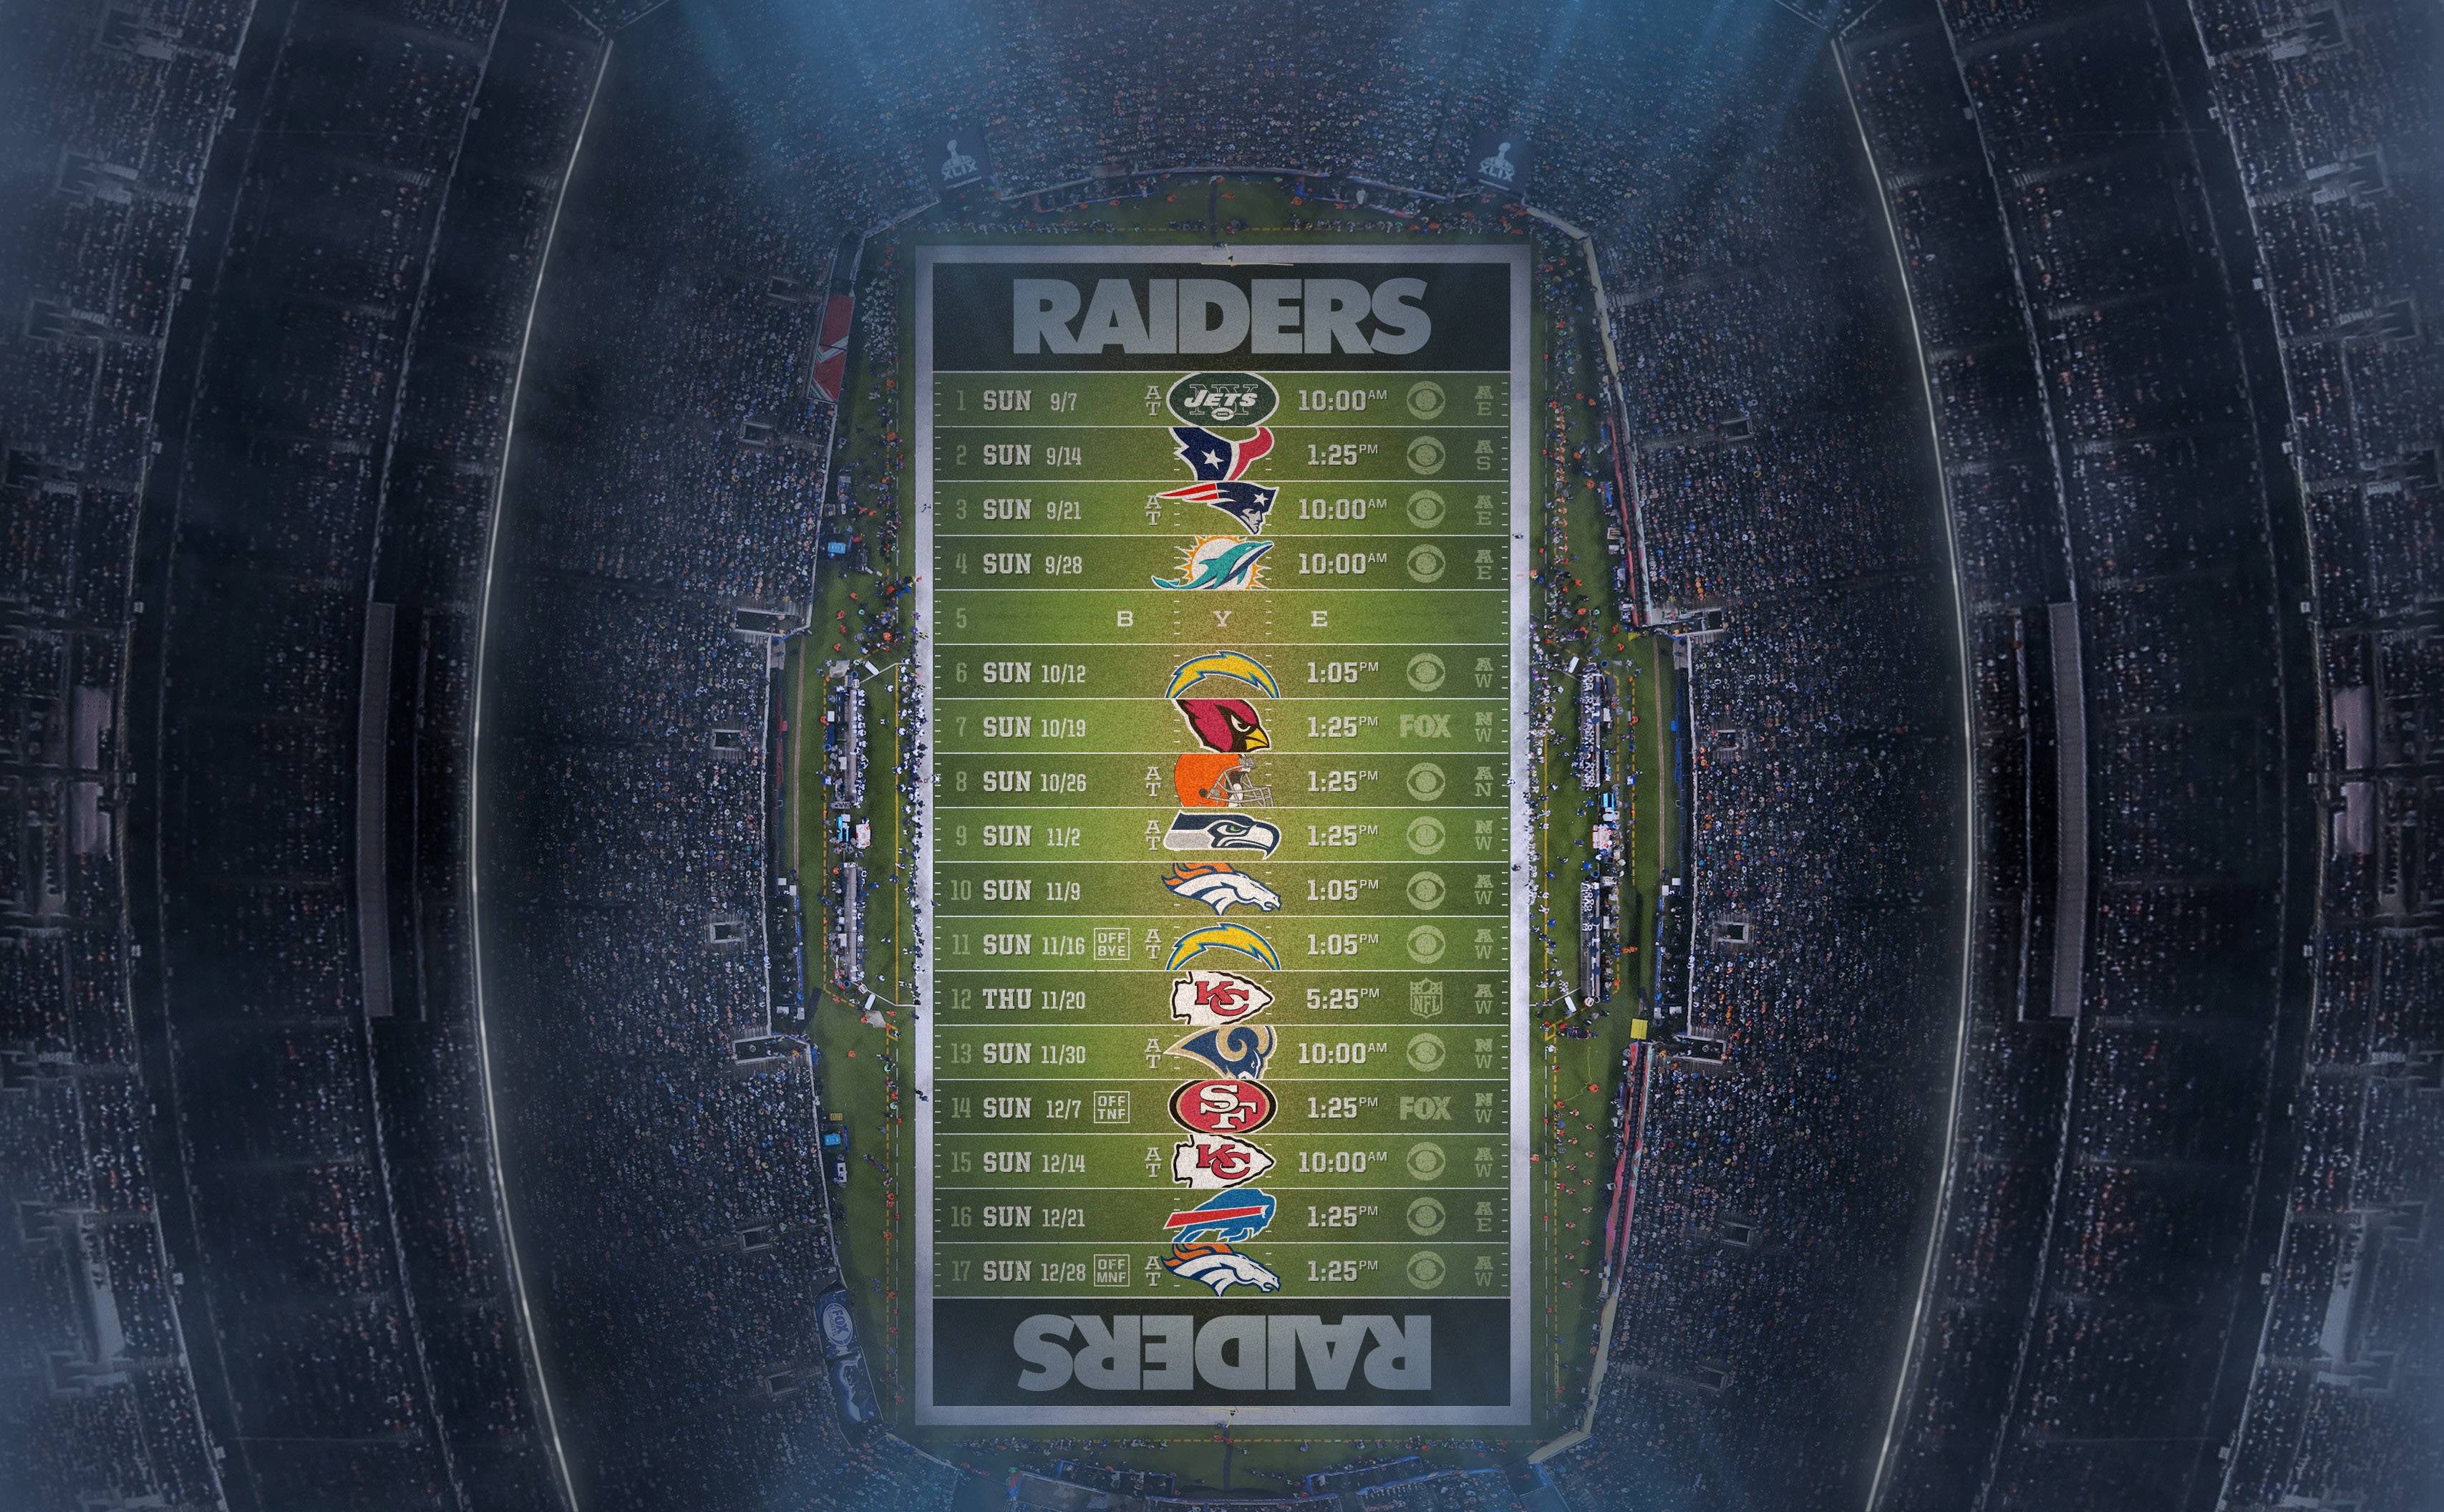 Oakland Raiders 2014 NFL Schedule Wallpaper Wide or HD. Sports